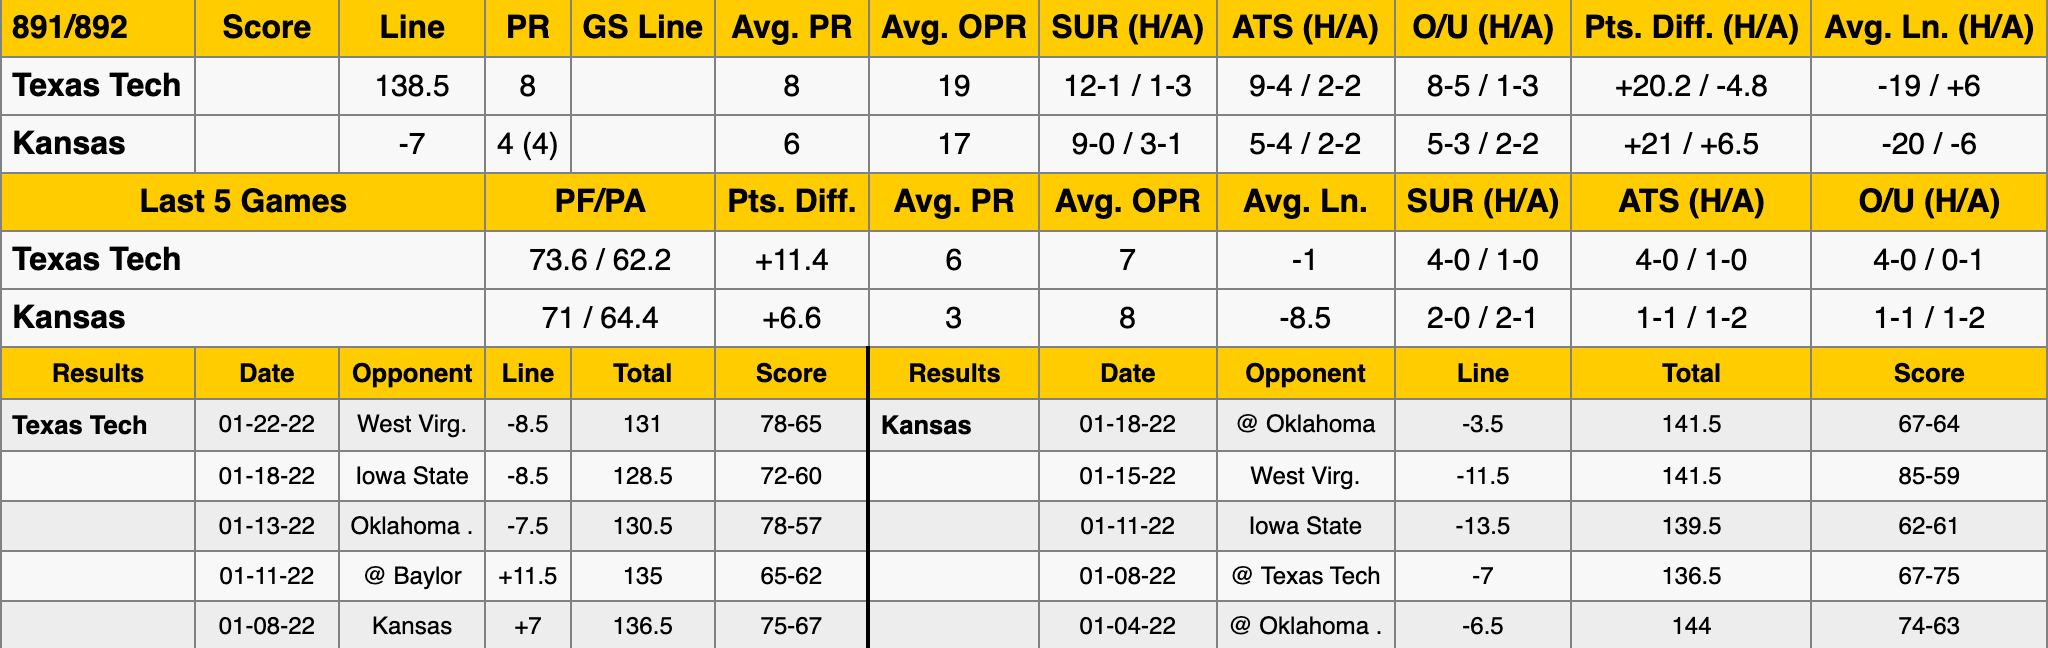 Texas Tech vs Kansas Stats Jan 24